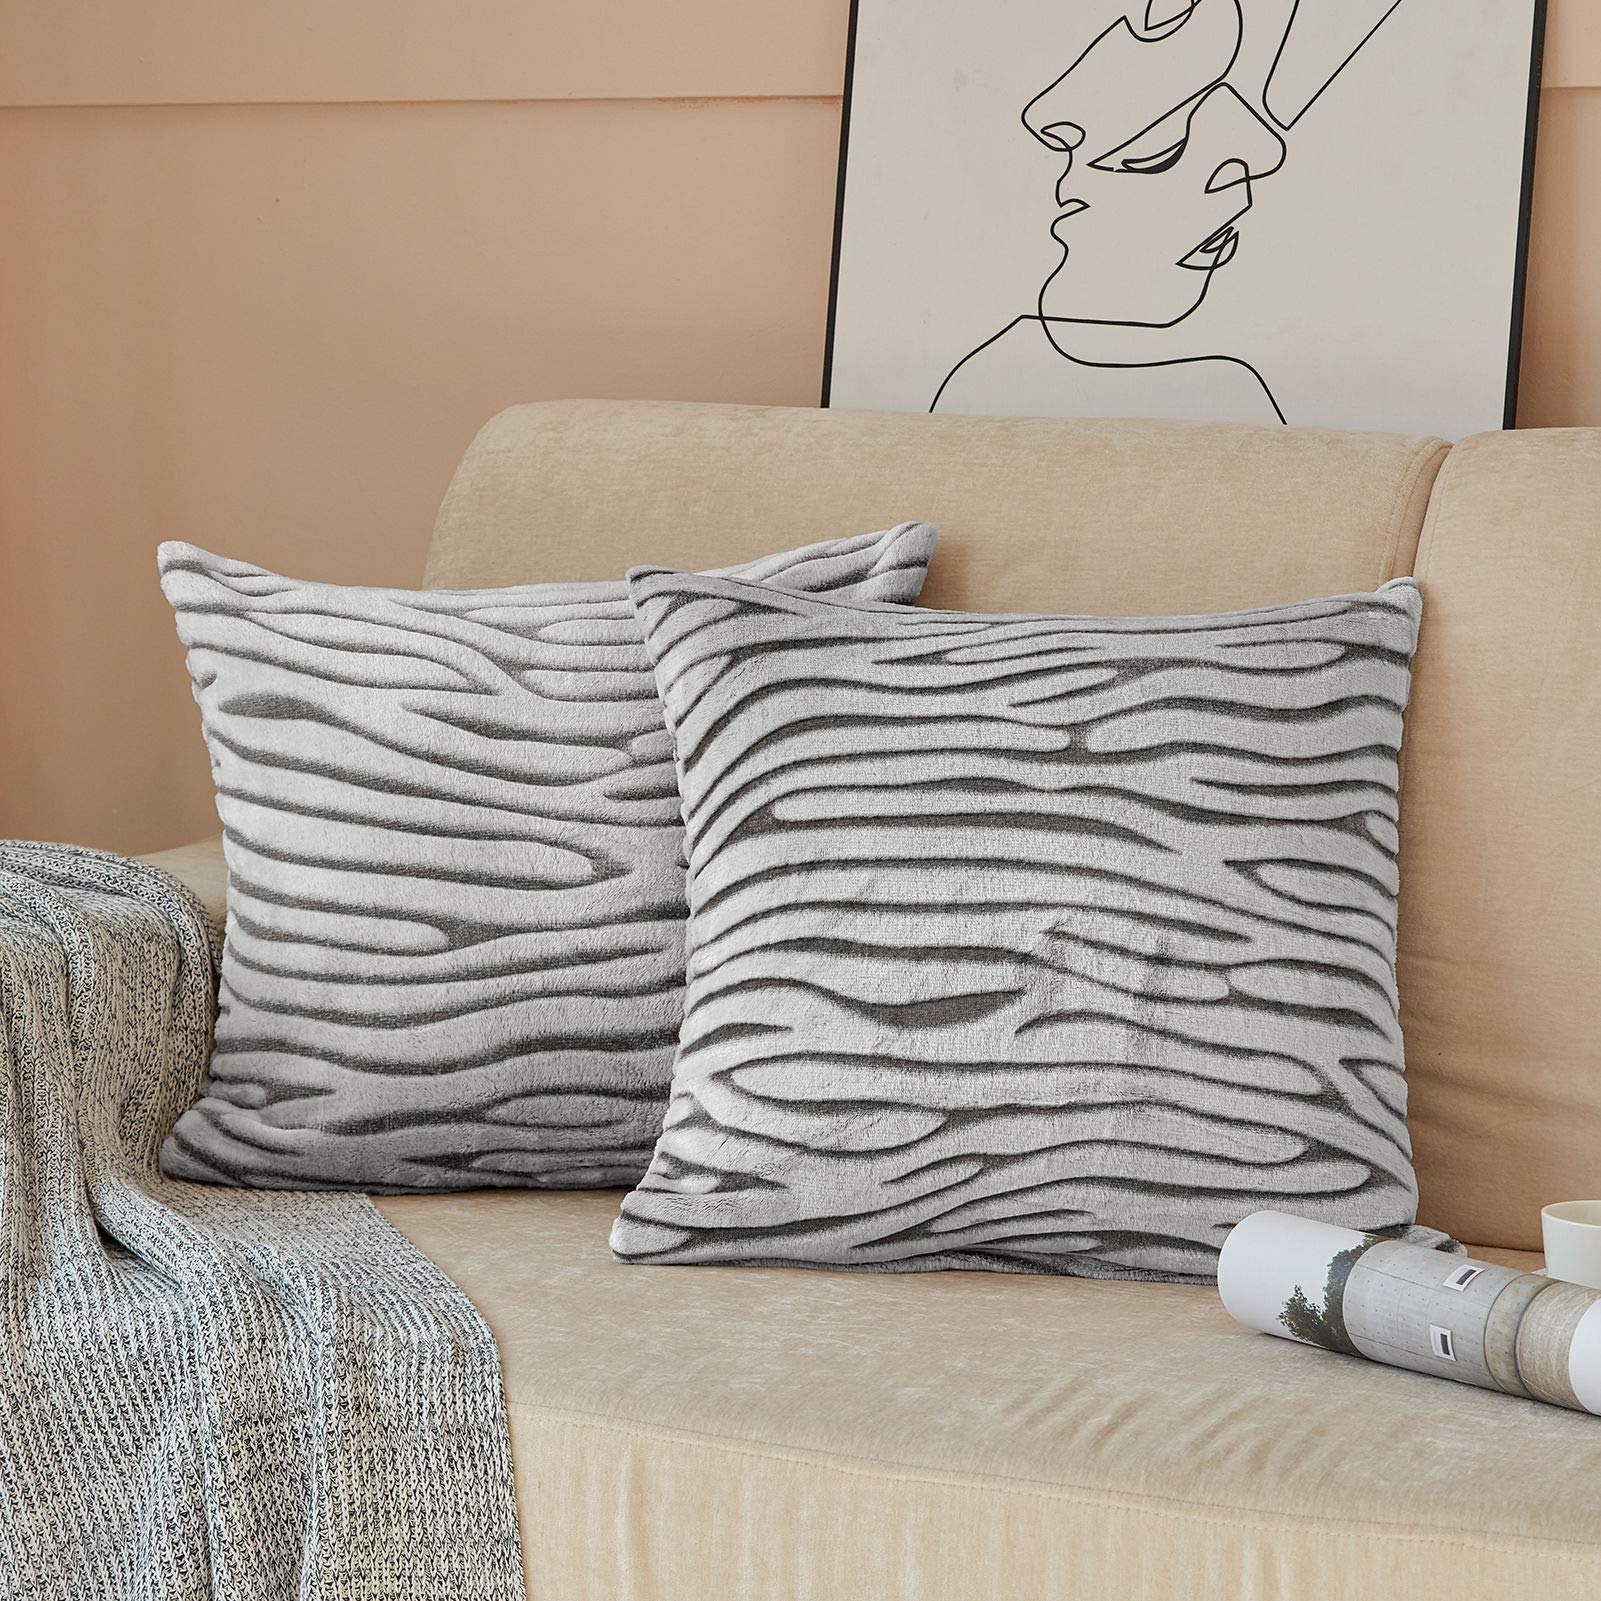 Flannel Fleece Pillow Cover - Zebra Print